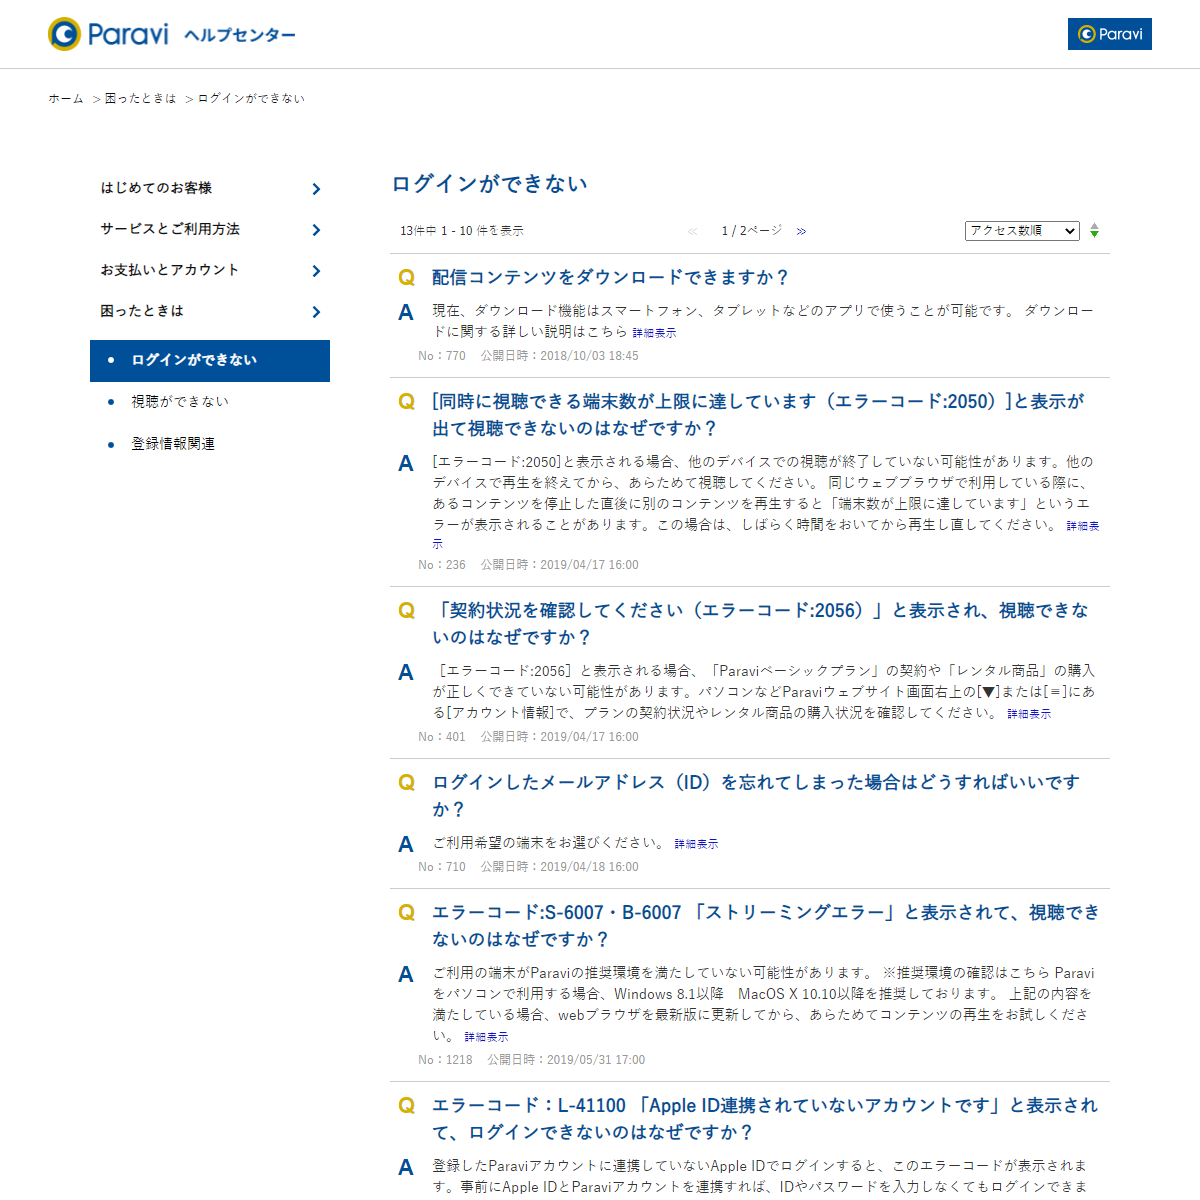 A complete backup of https://help.paravi.jp/category/show/23?site_domain=default